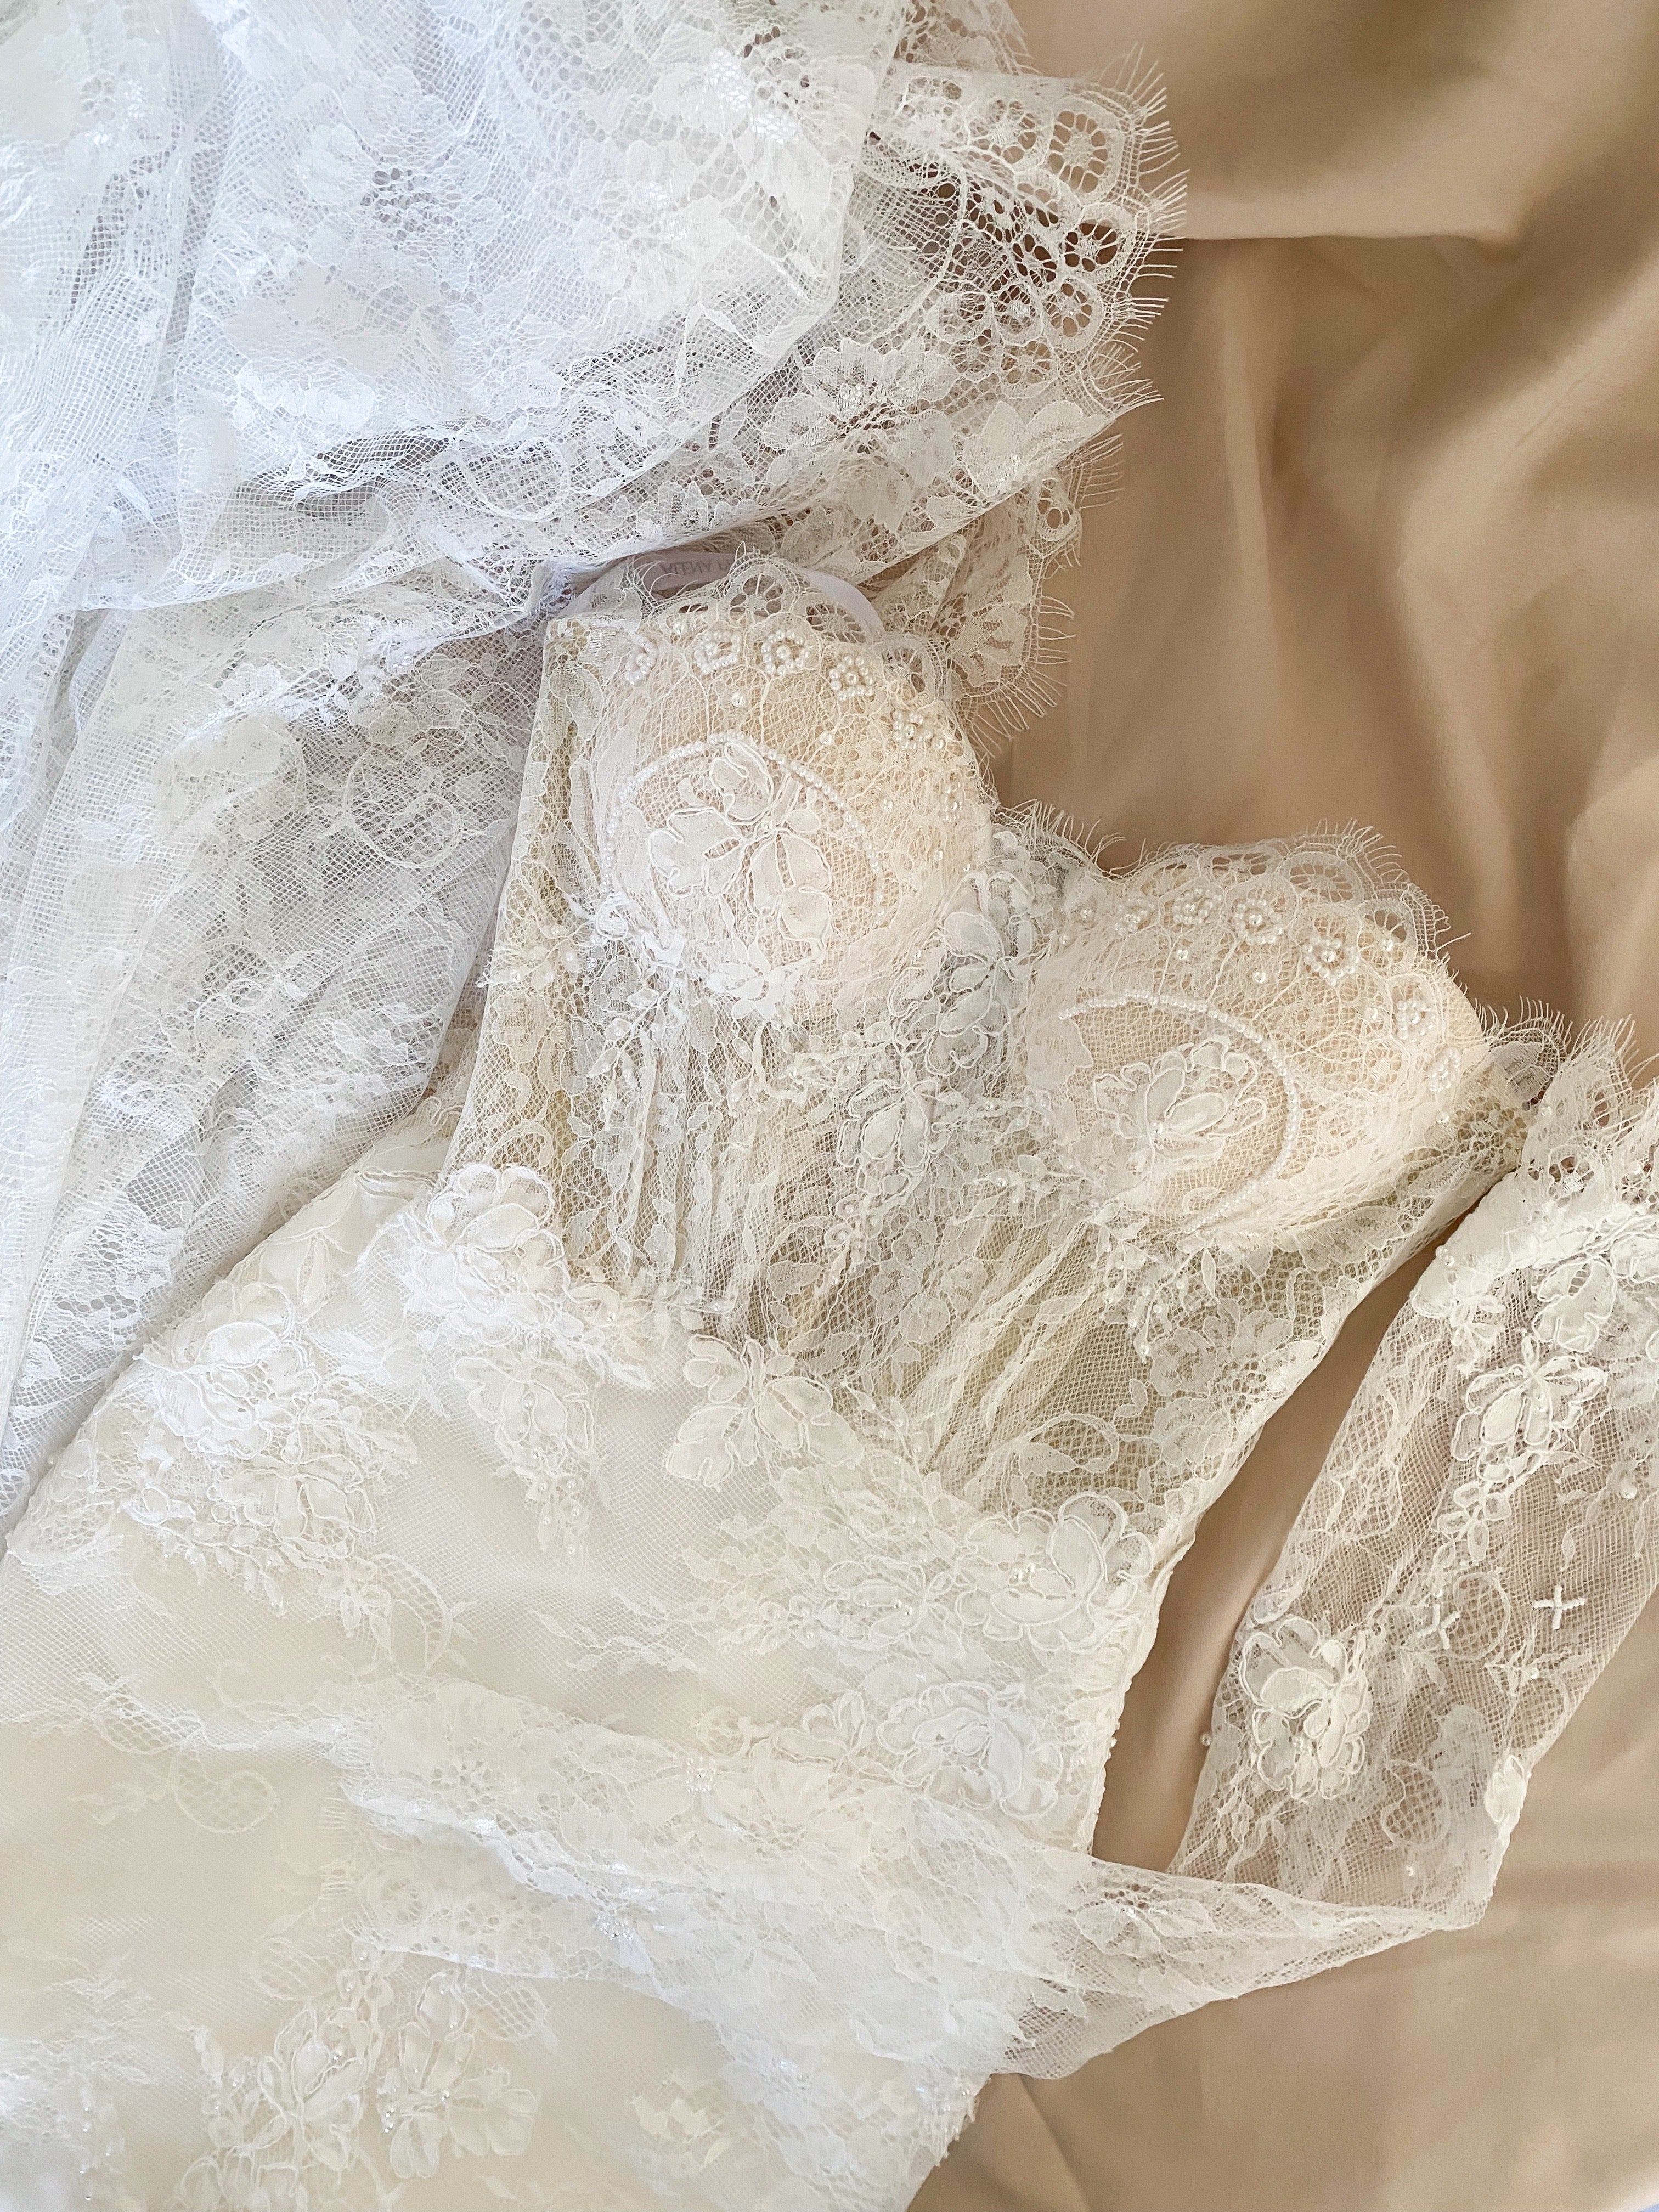 Chiffon A-line Wedding Dress With Detachable Long Sleeves | Kleinfeld Bridal